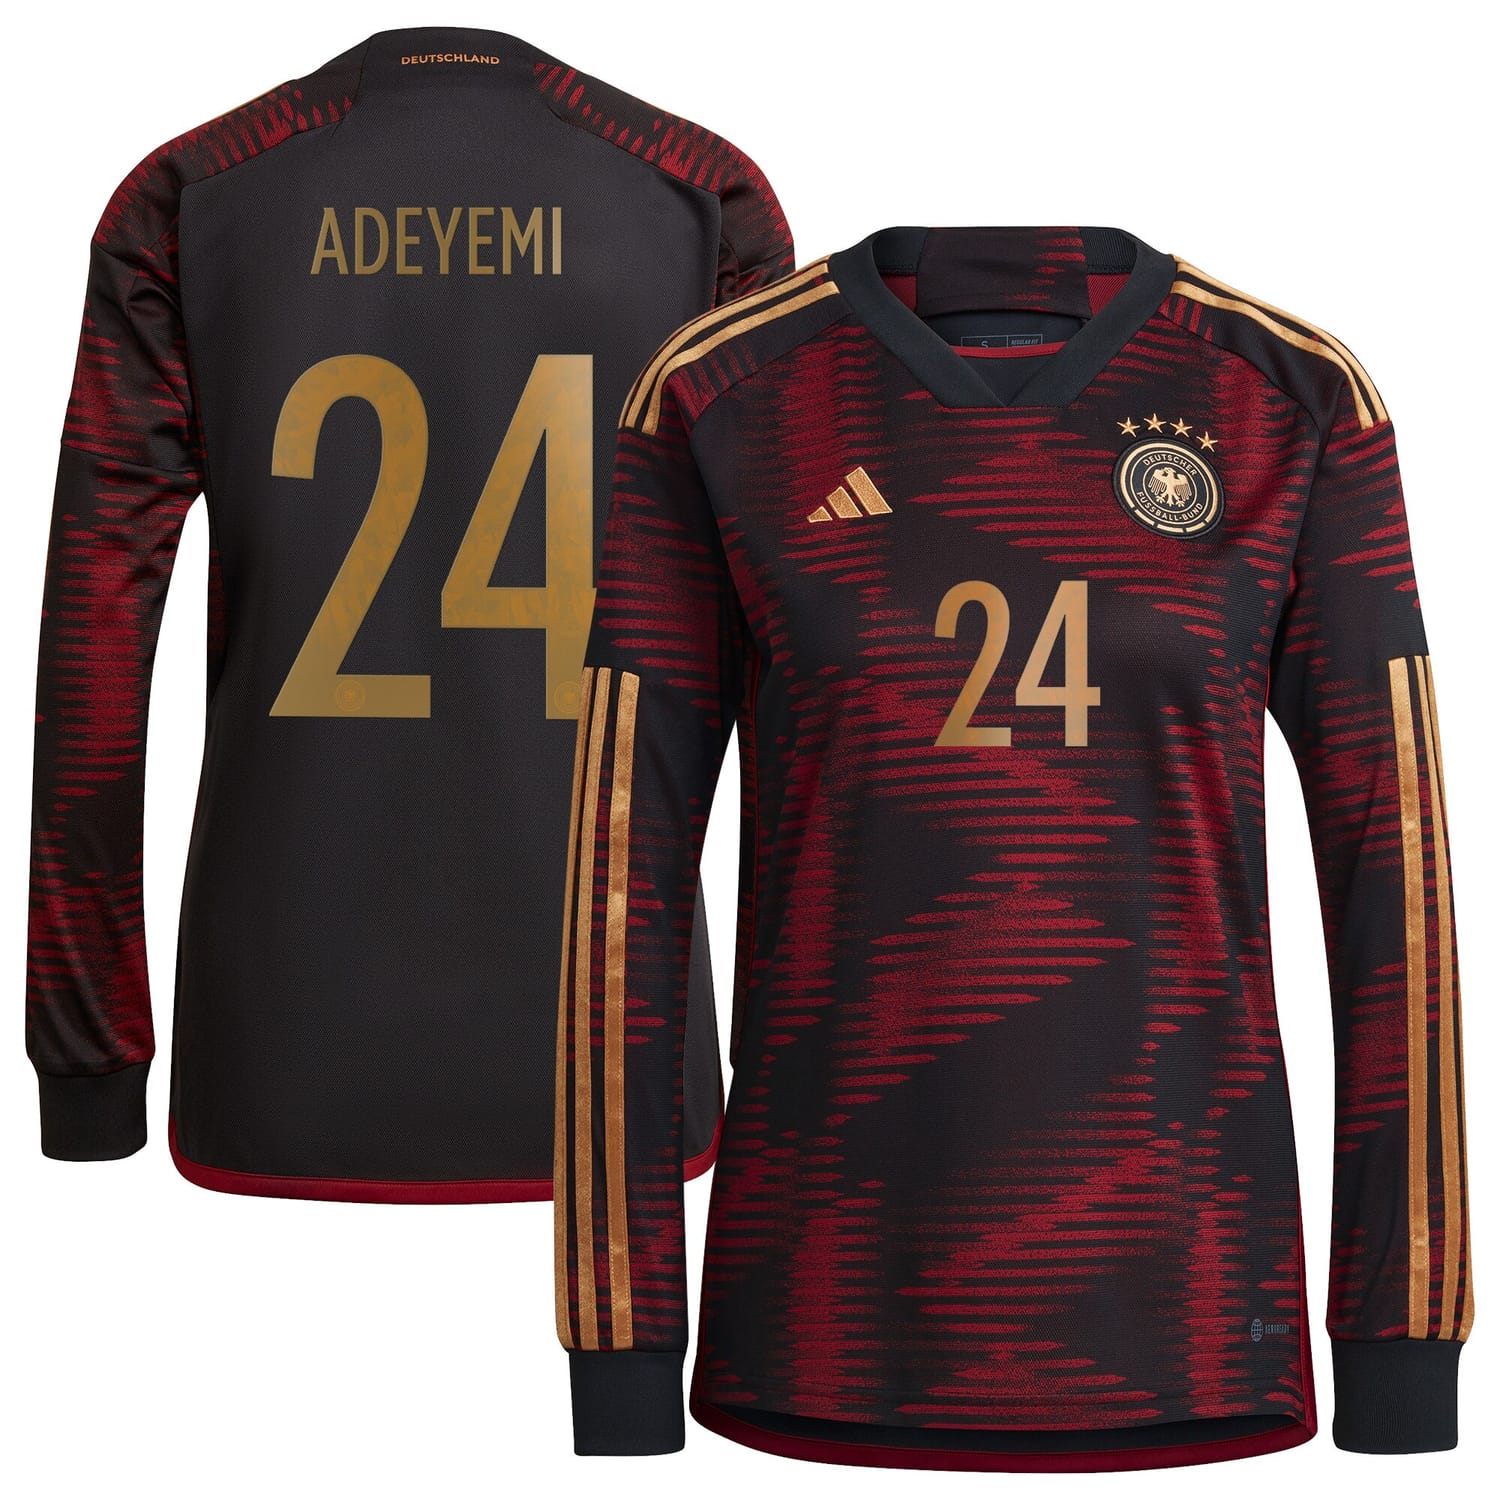 Germany National Team Away Jersey Shirt Long Sleeve 2022 player Karim Adeyemi 24 printing for Women